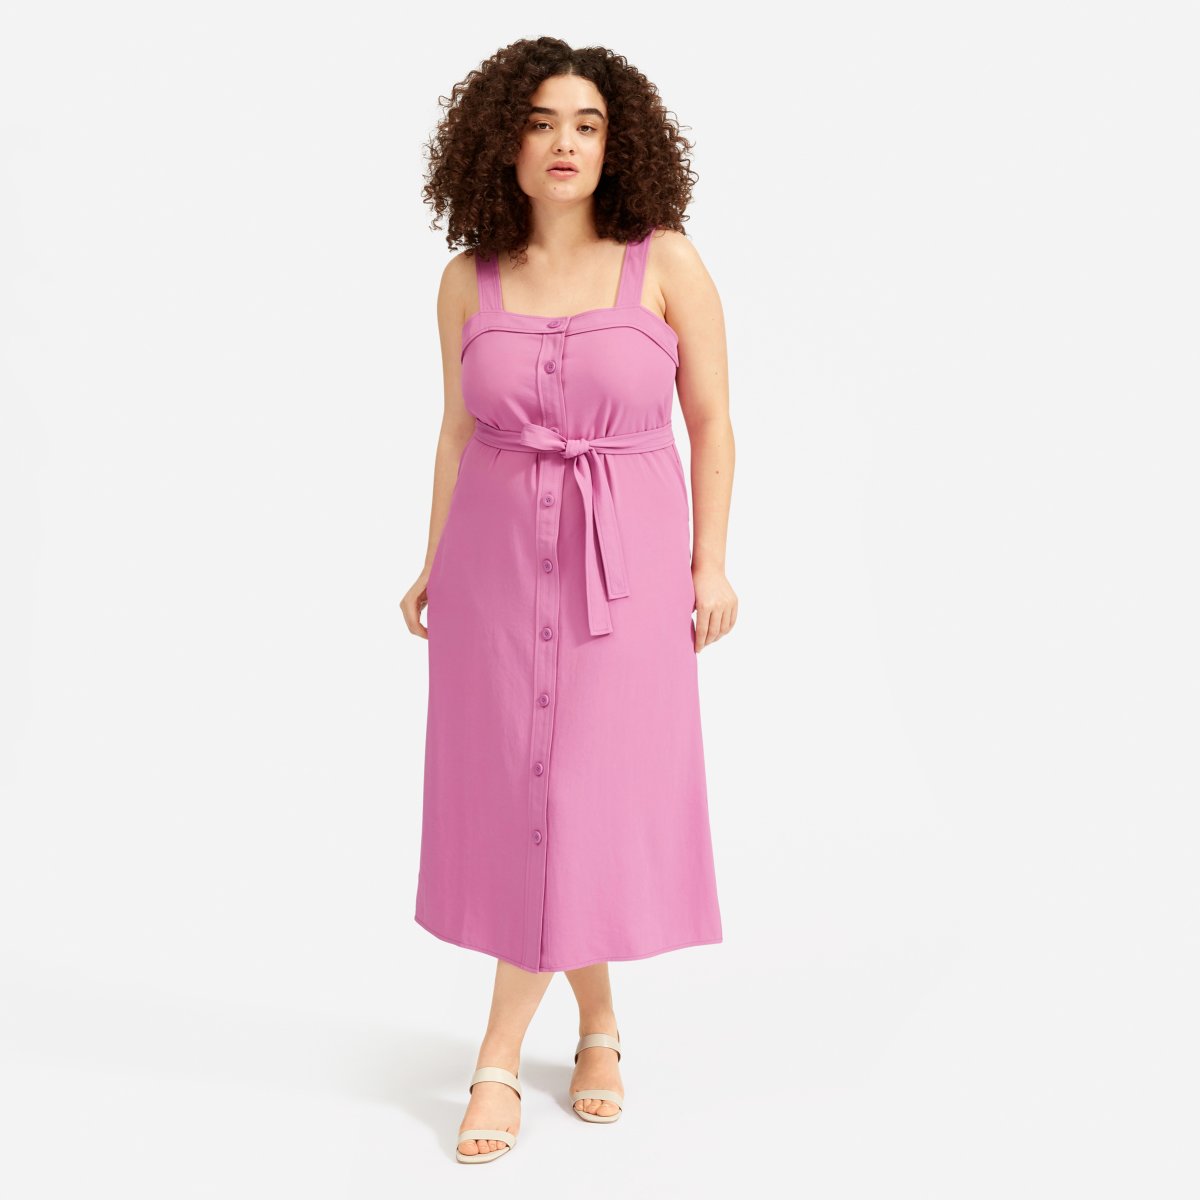 Everlane Choose What You Pay / Magenta Dress - Sunshine Style, A Florida Based Fashion Blog